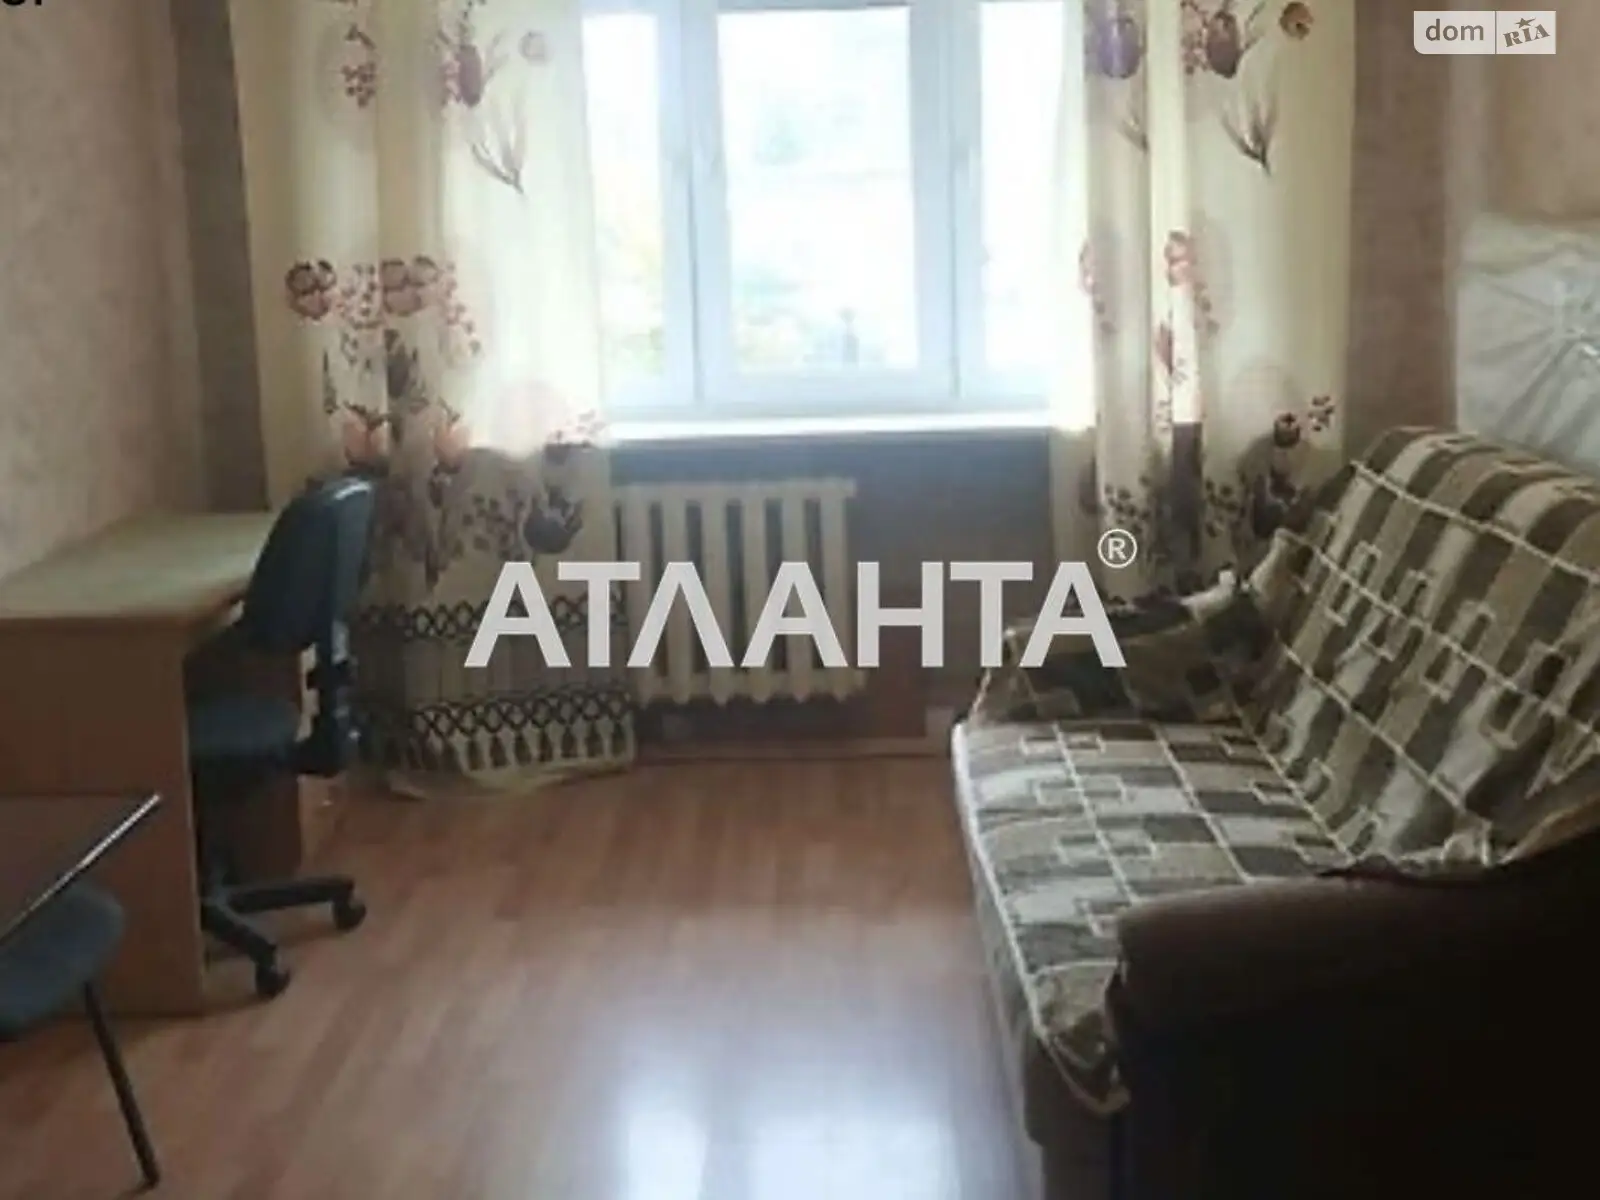 Продается комната 24.5 кв. м в Одессе, цена: 10500 $ - фото 1